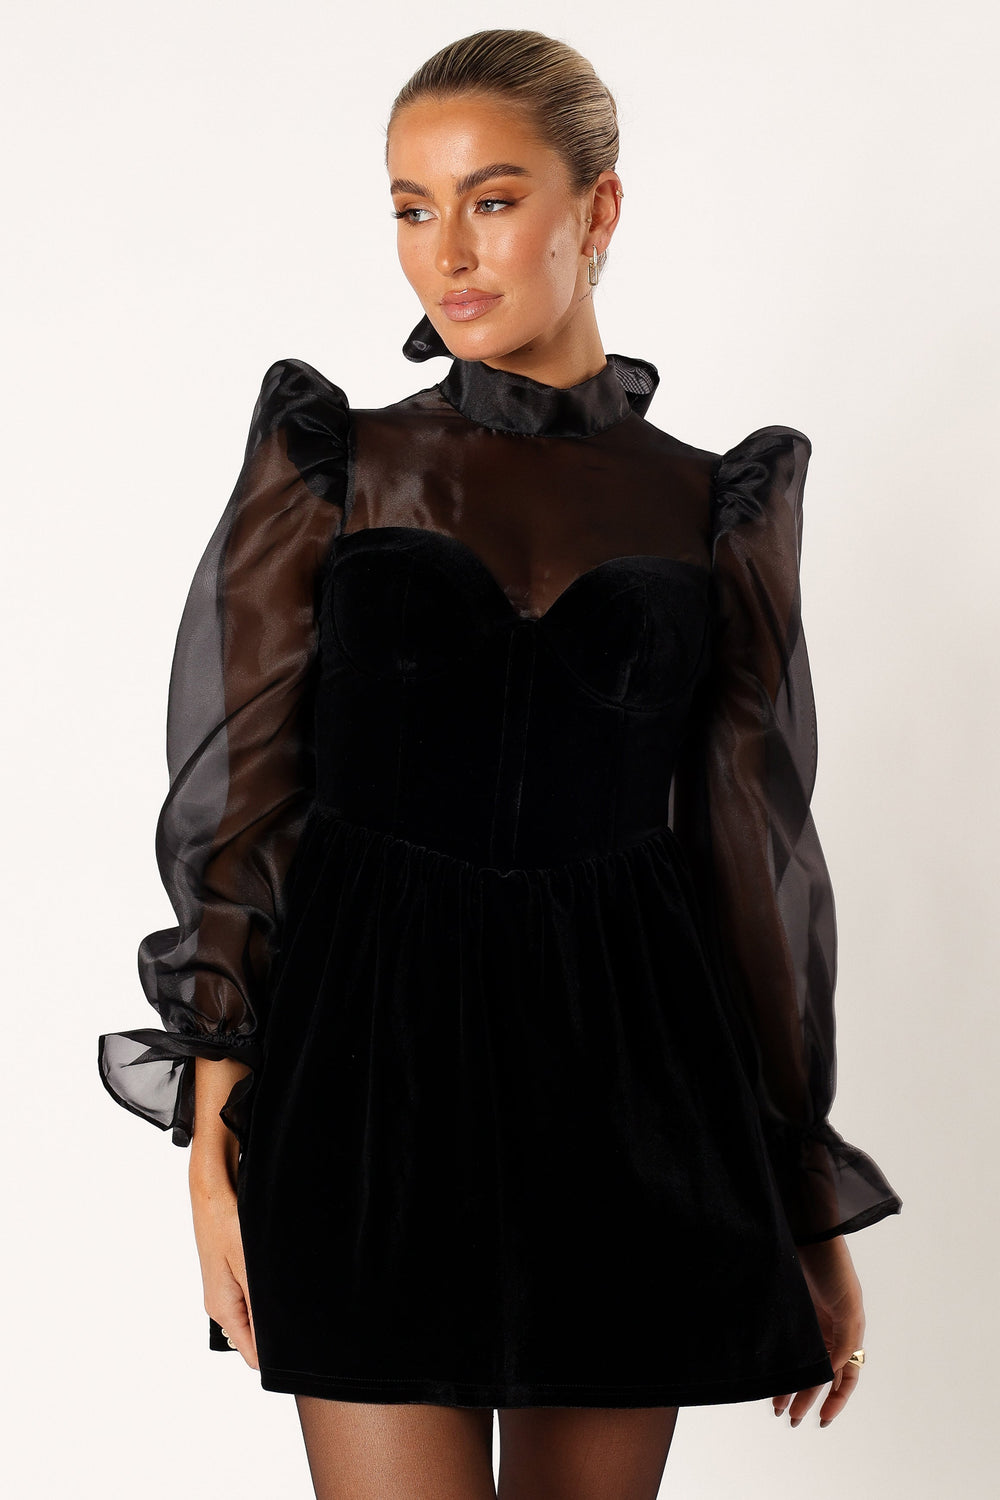 & Petal Sleeve Long Blaire Mini - USA - Dress Pup Black